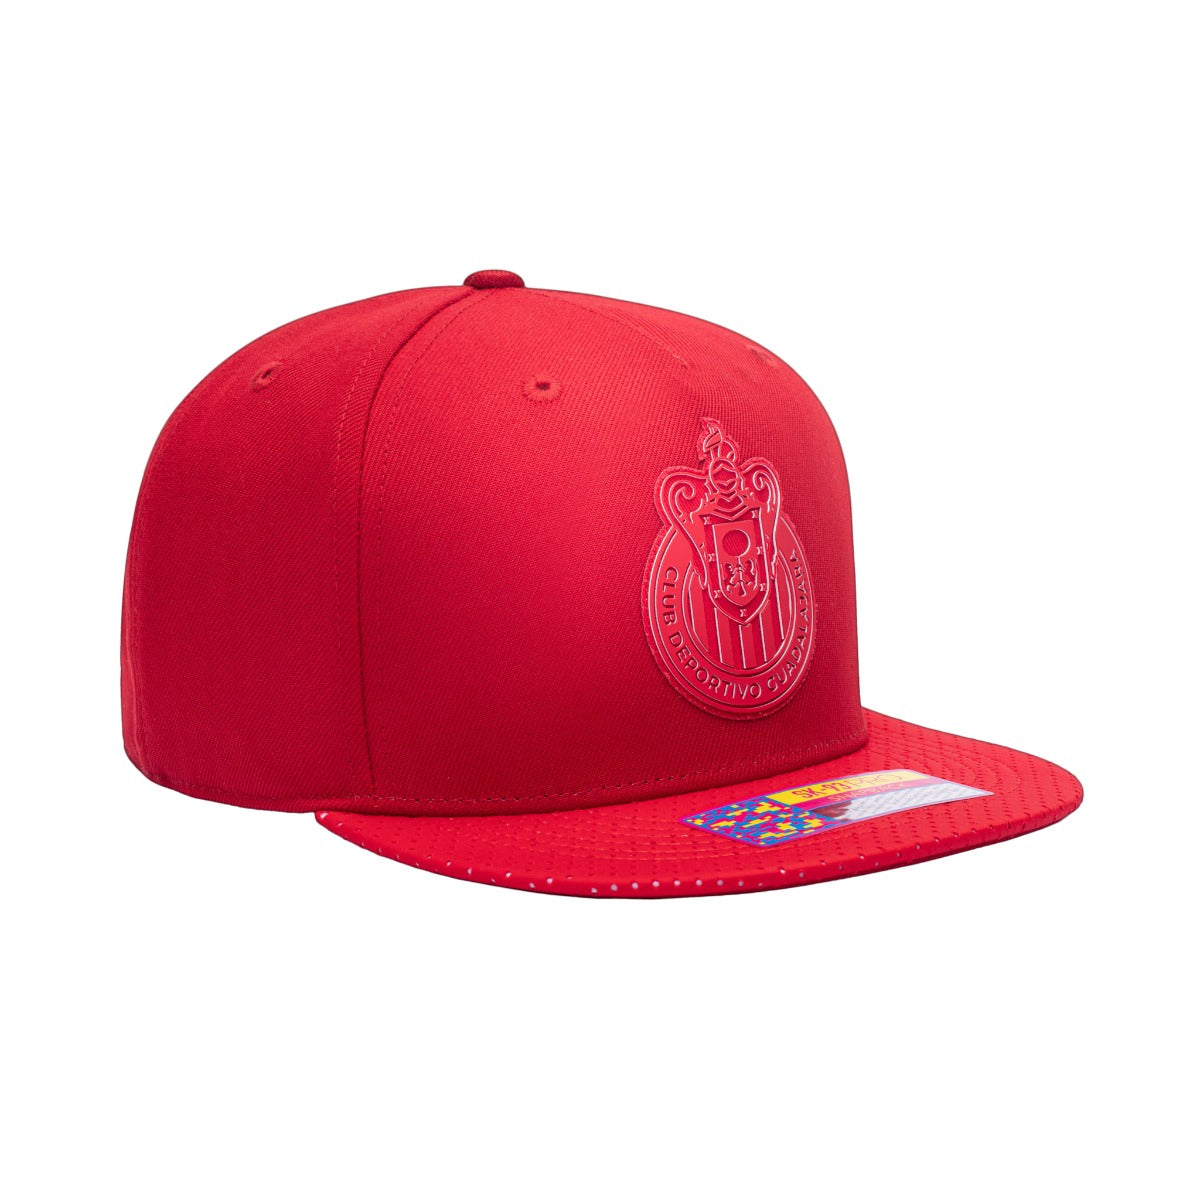 FI Collection Chivas Elite Snapback Hat - Red (Diagonal 2)